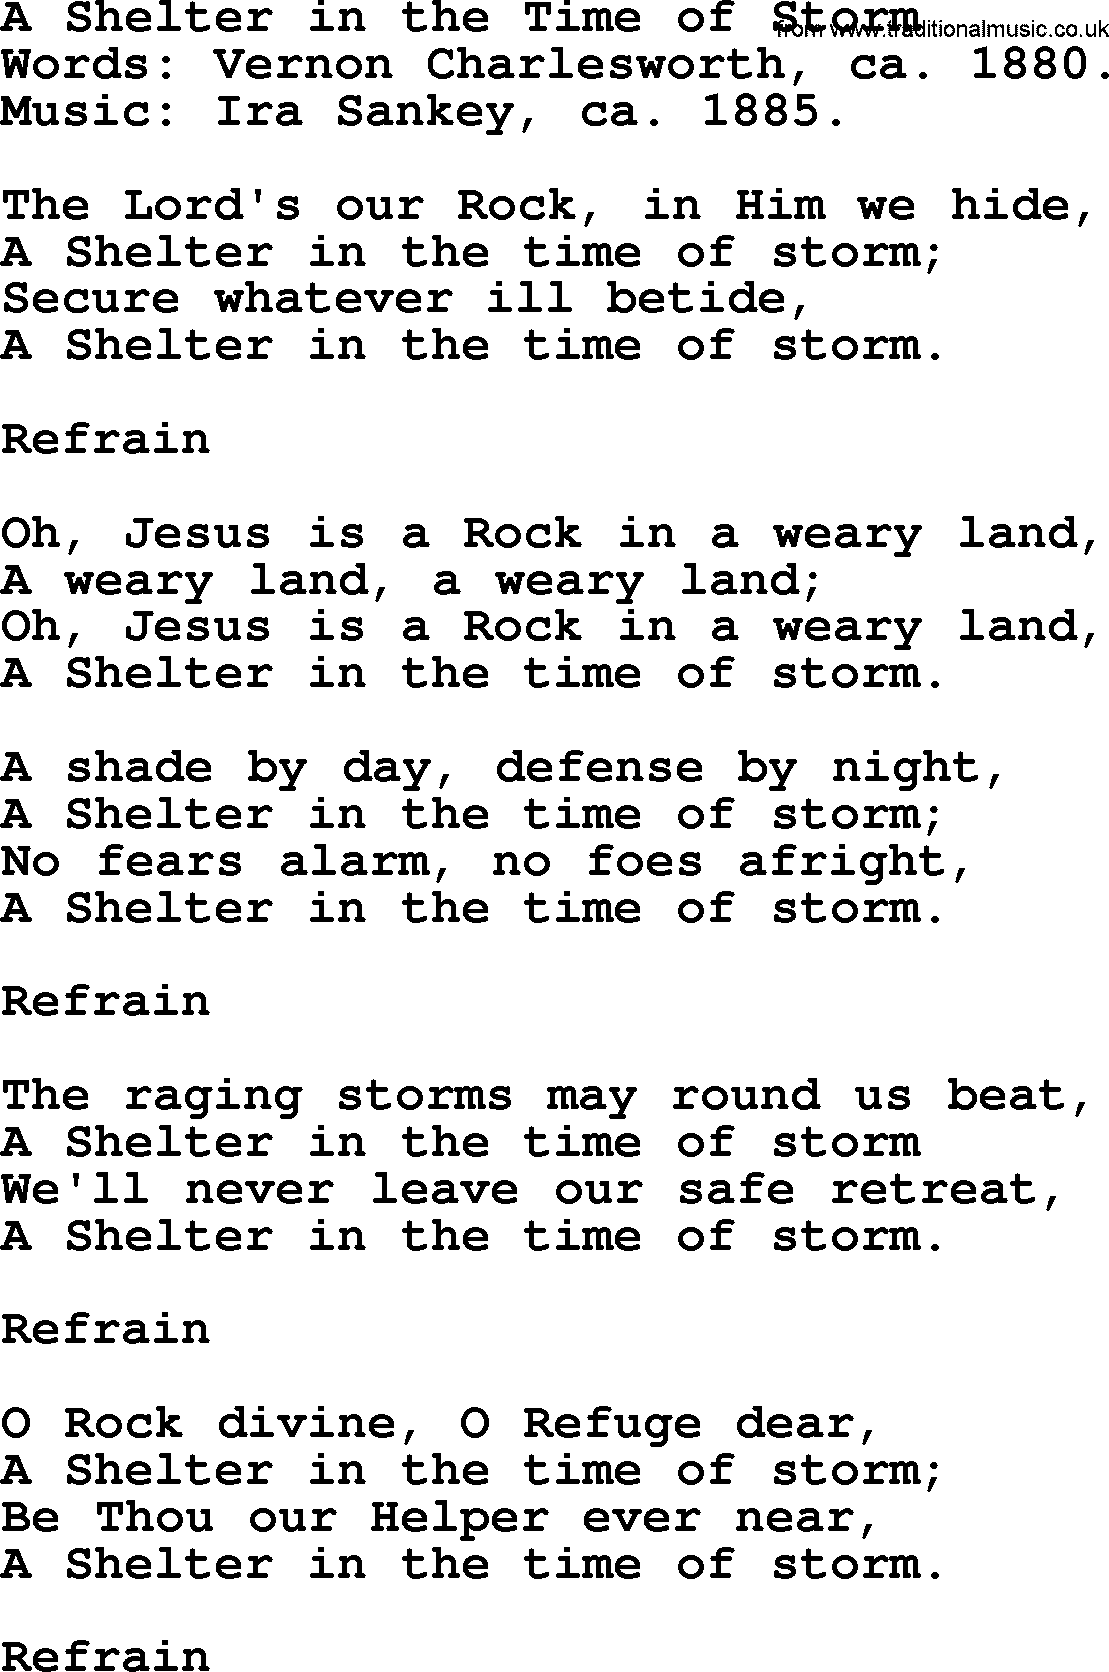 Ira Sankey hymn: A Shelter in the Time of Storm-Ira Sankey, lyrics